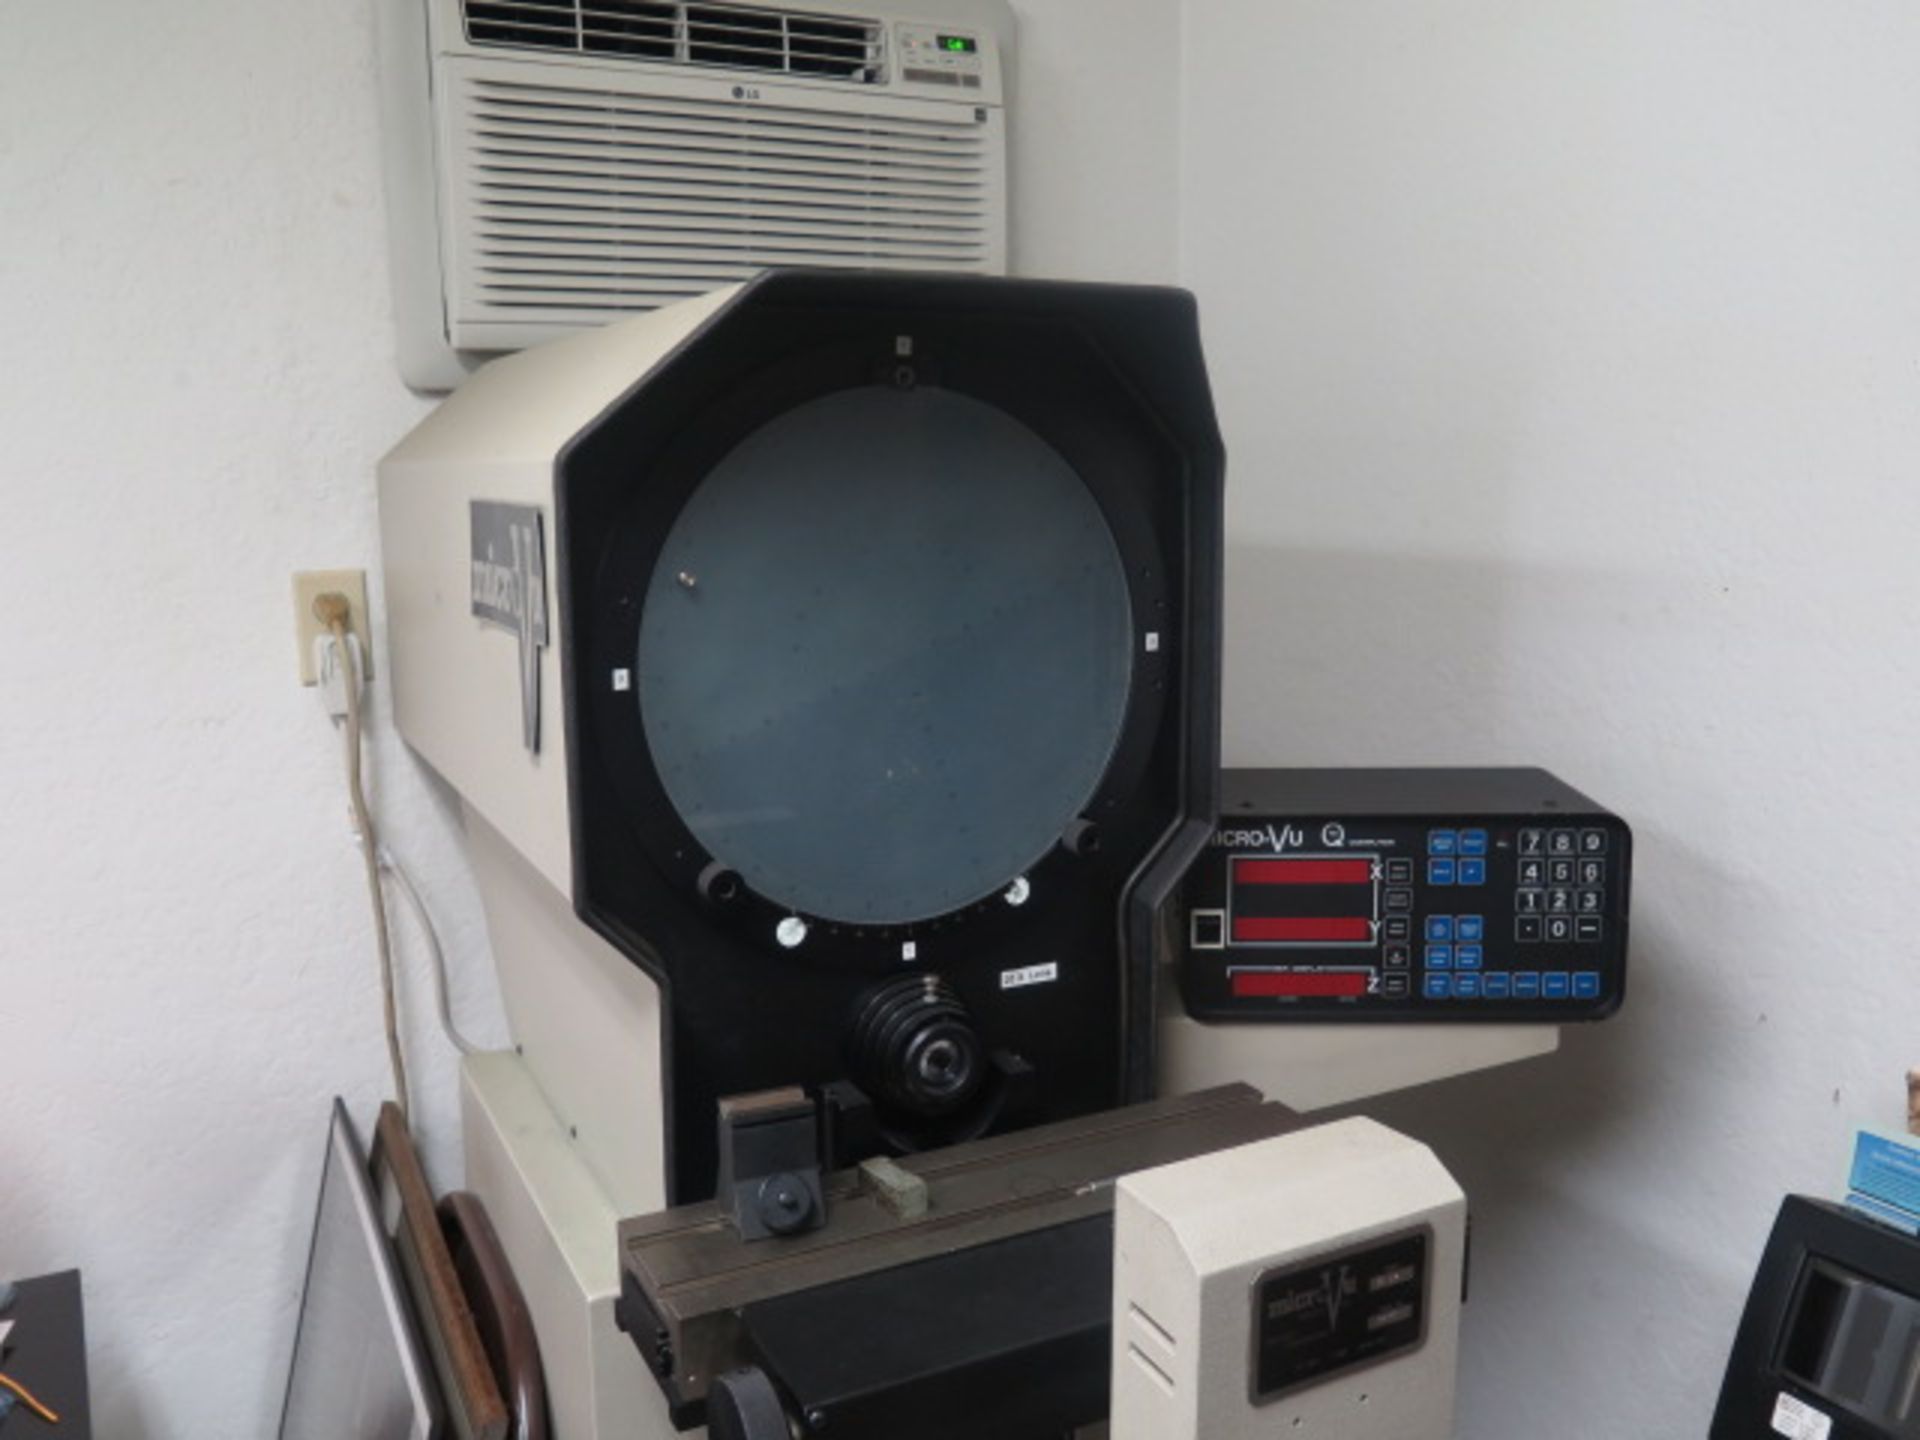 MicroVu mdl. H-14 14” Floor Model Optical Comparator s/n 3500 w/ MicroVu Q16 Programmable DRO, - Image 2 of 9